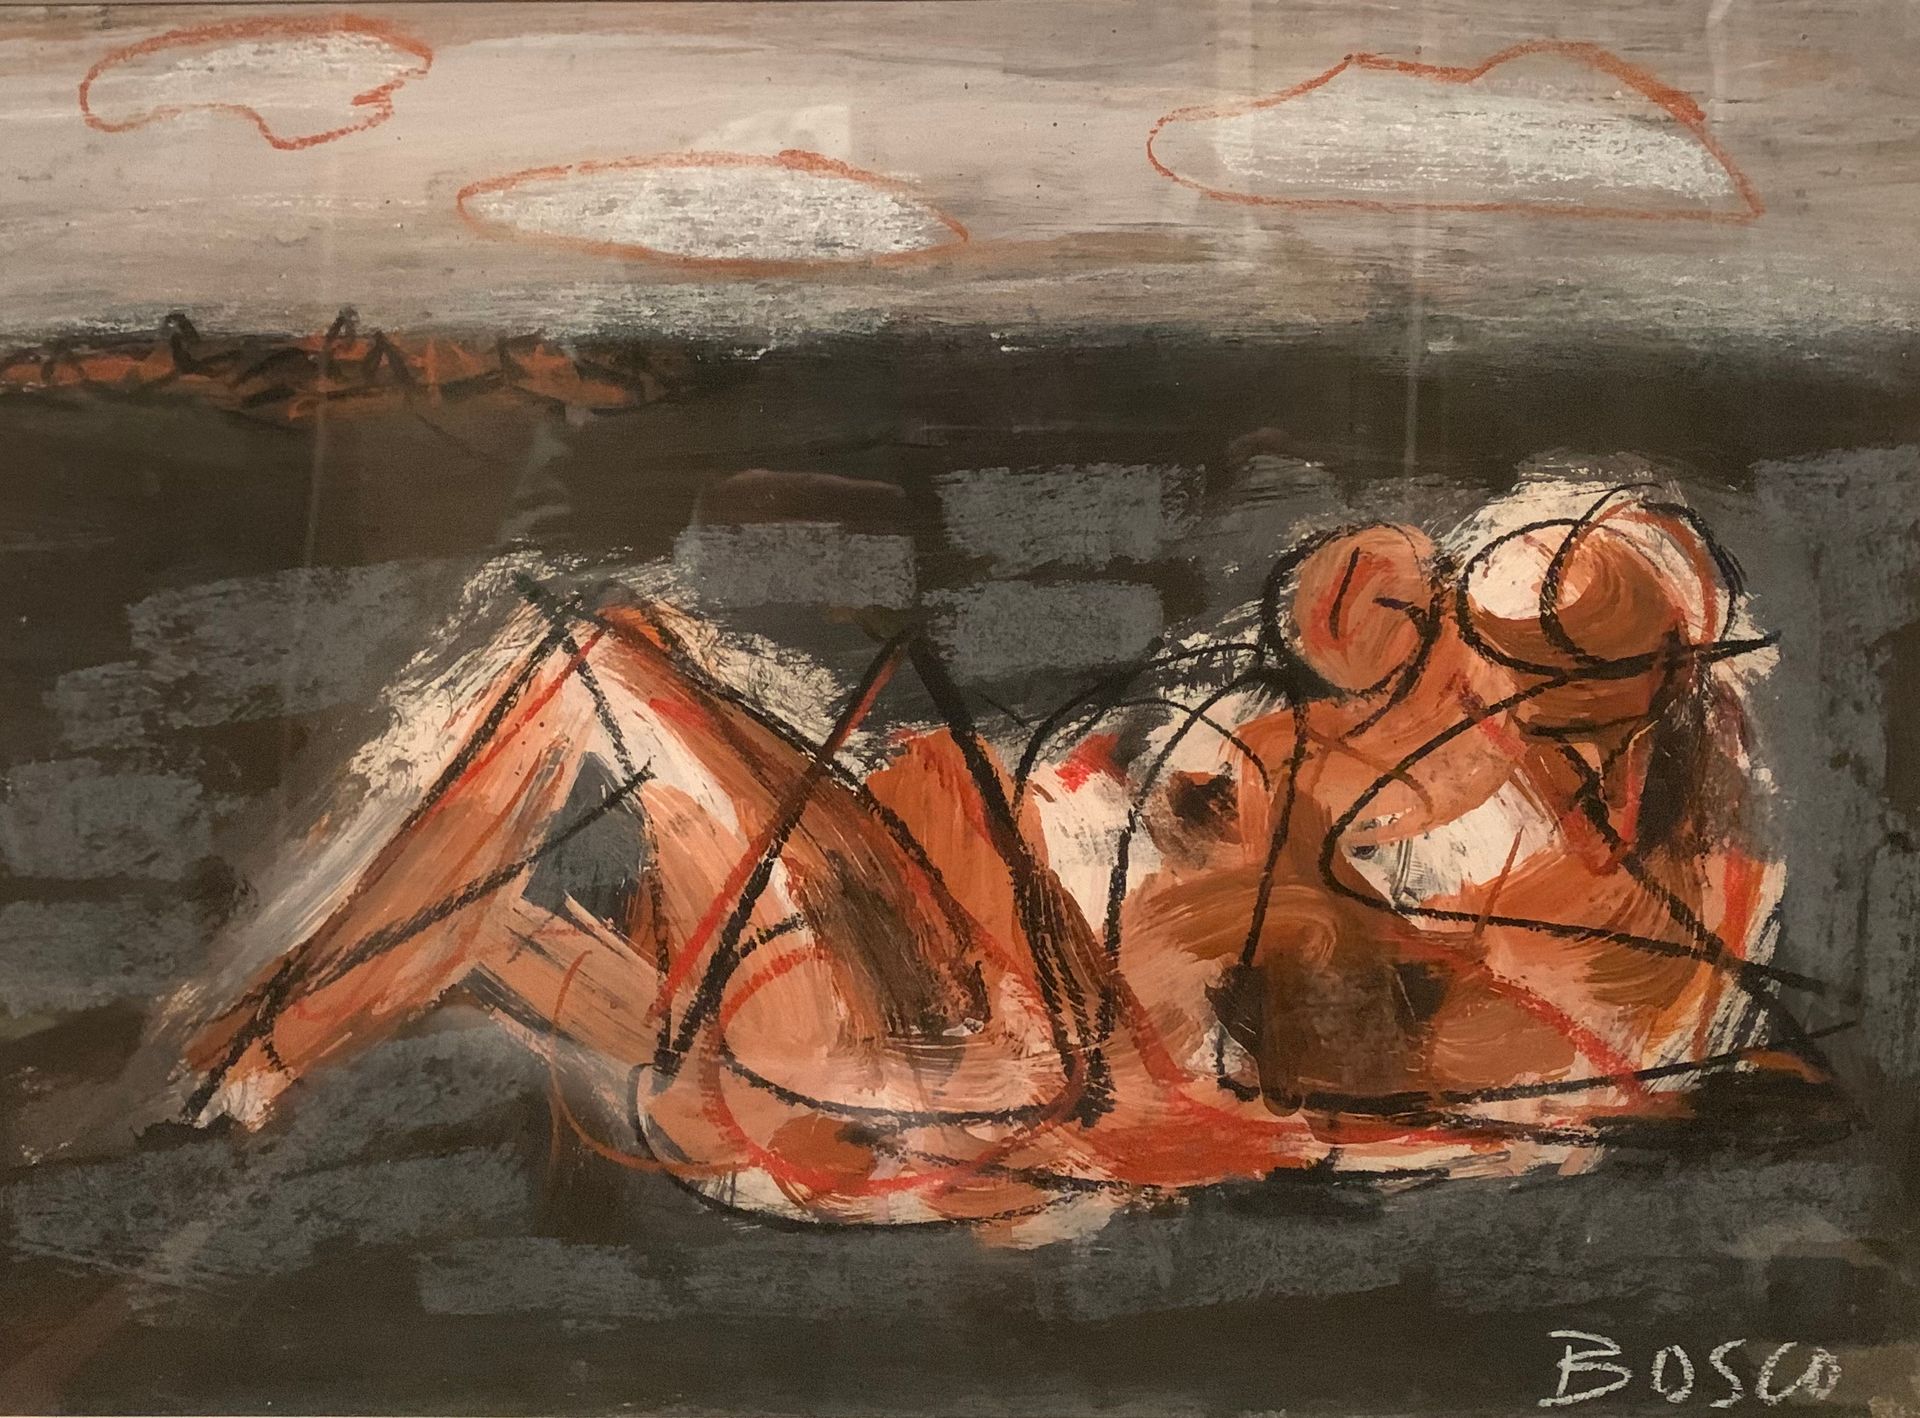 Null 皮埃尔-博斯克 (1909-1993)

裸体夫妇

水粉画，右下角有签名

31 x 44 厘米